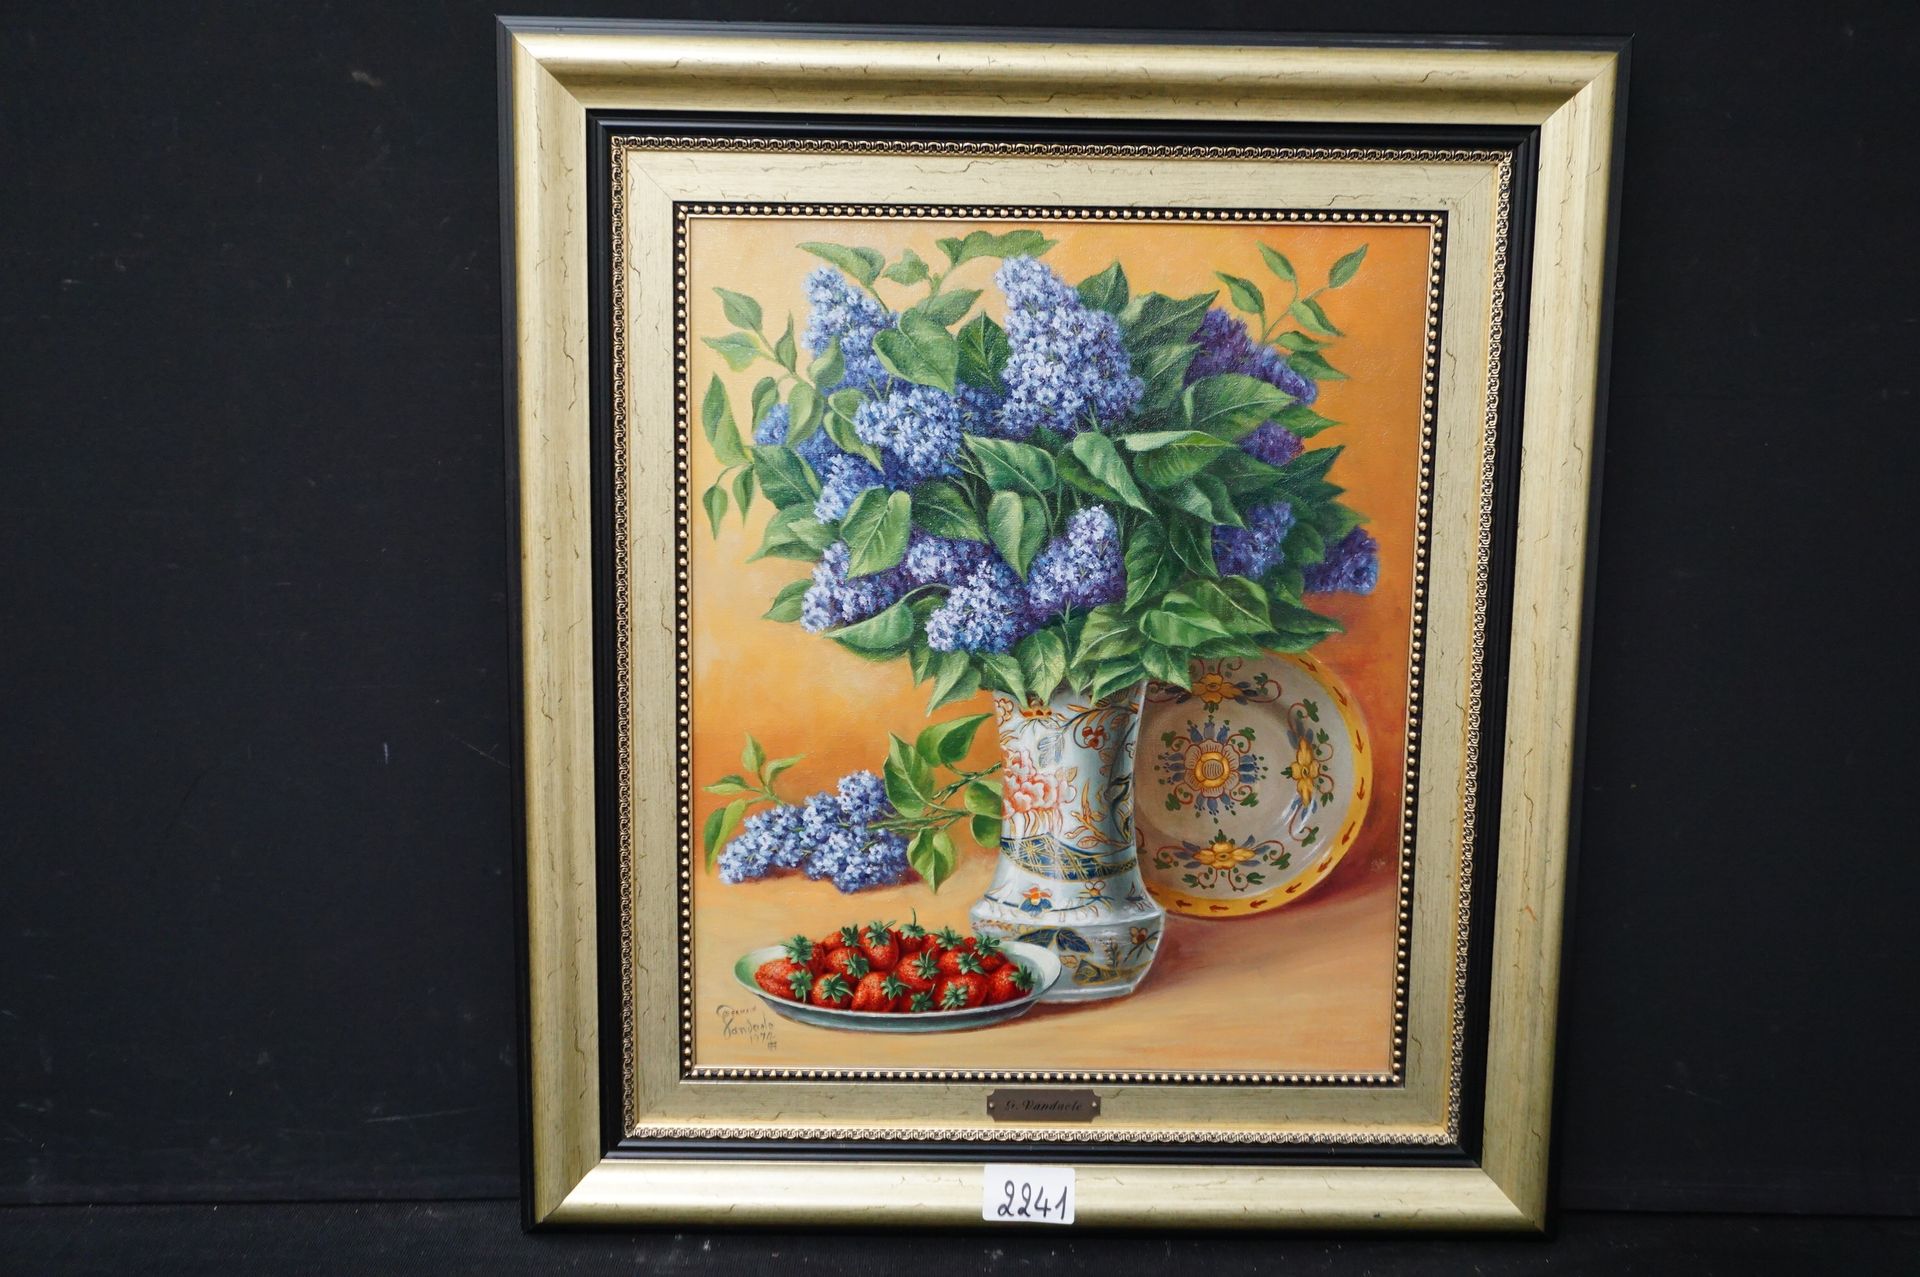 GERMAIN VANDAELE "有花和草莓的静物" - 布面油画 - 签名和日期1974年 - 60 x 50 cm